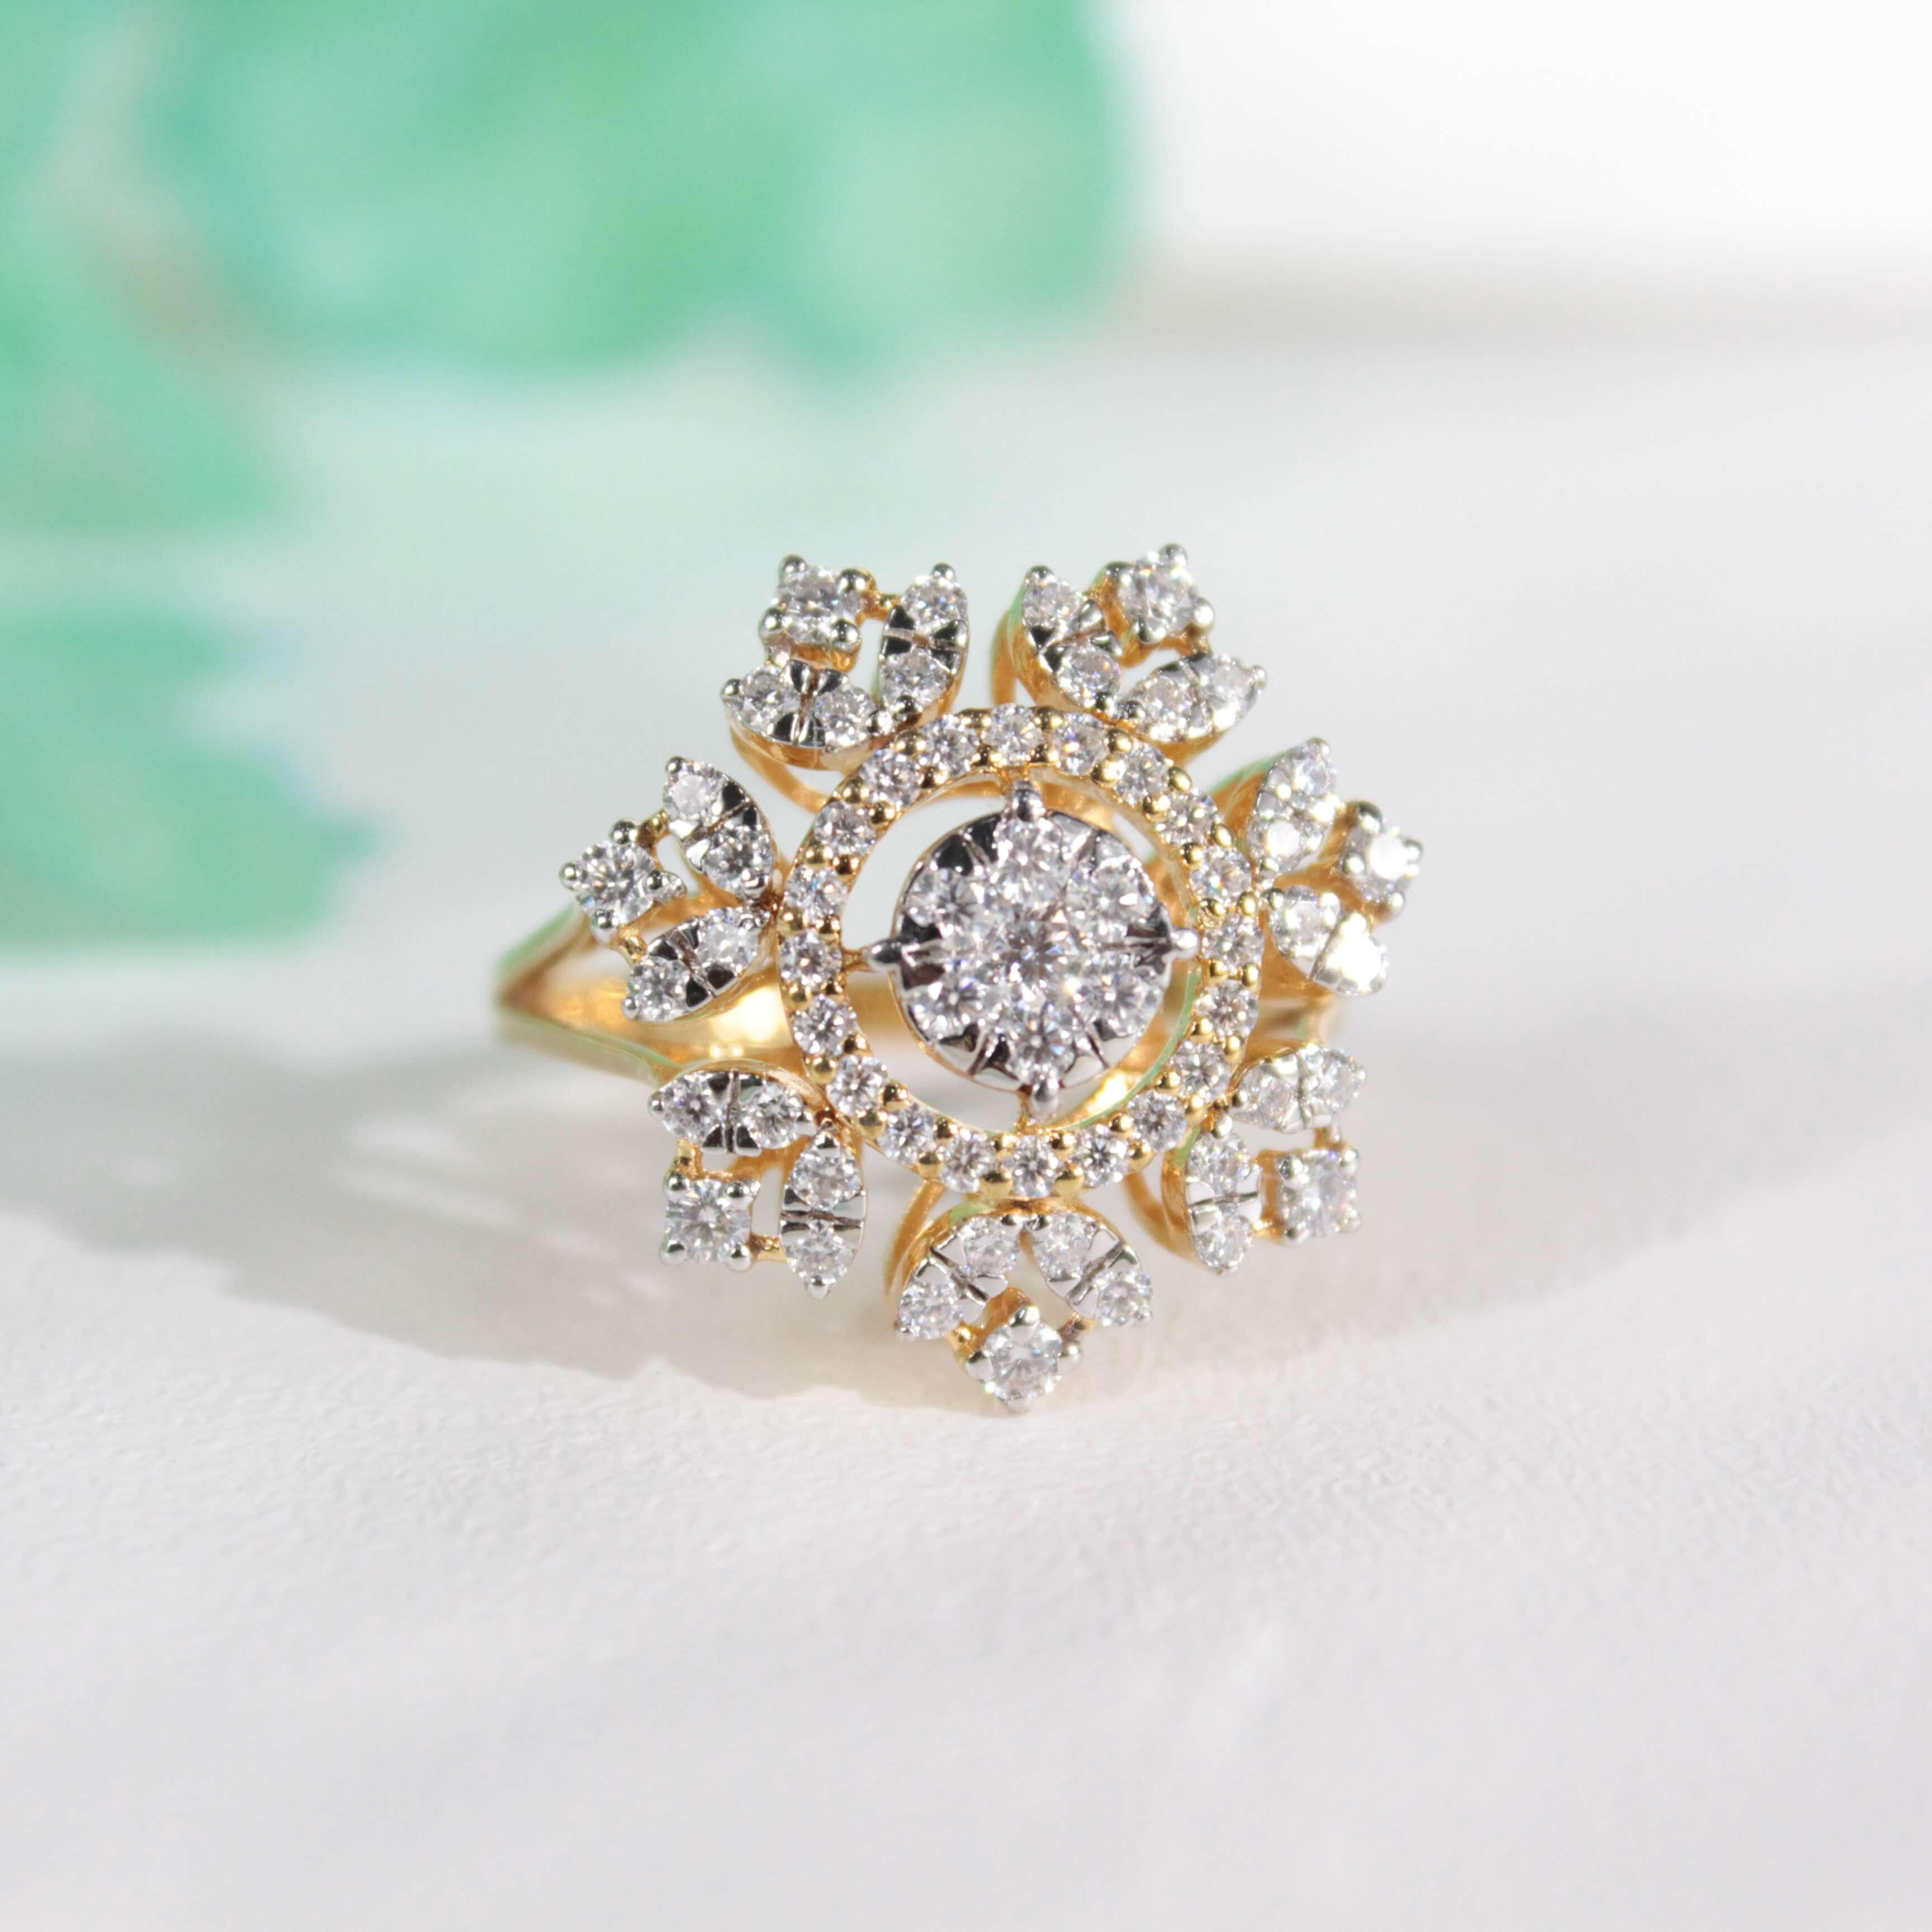 Nitala Silver Fashion Ring For Women - Shinez By Baxi Jewellers